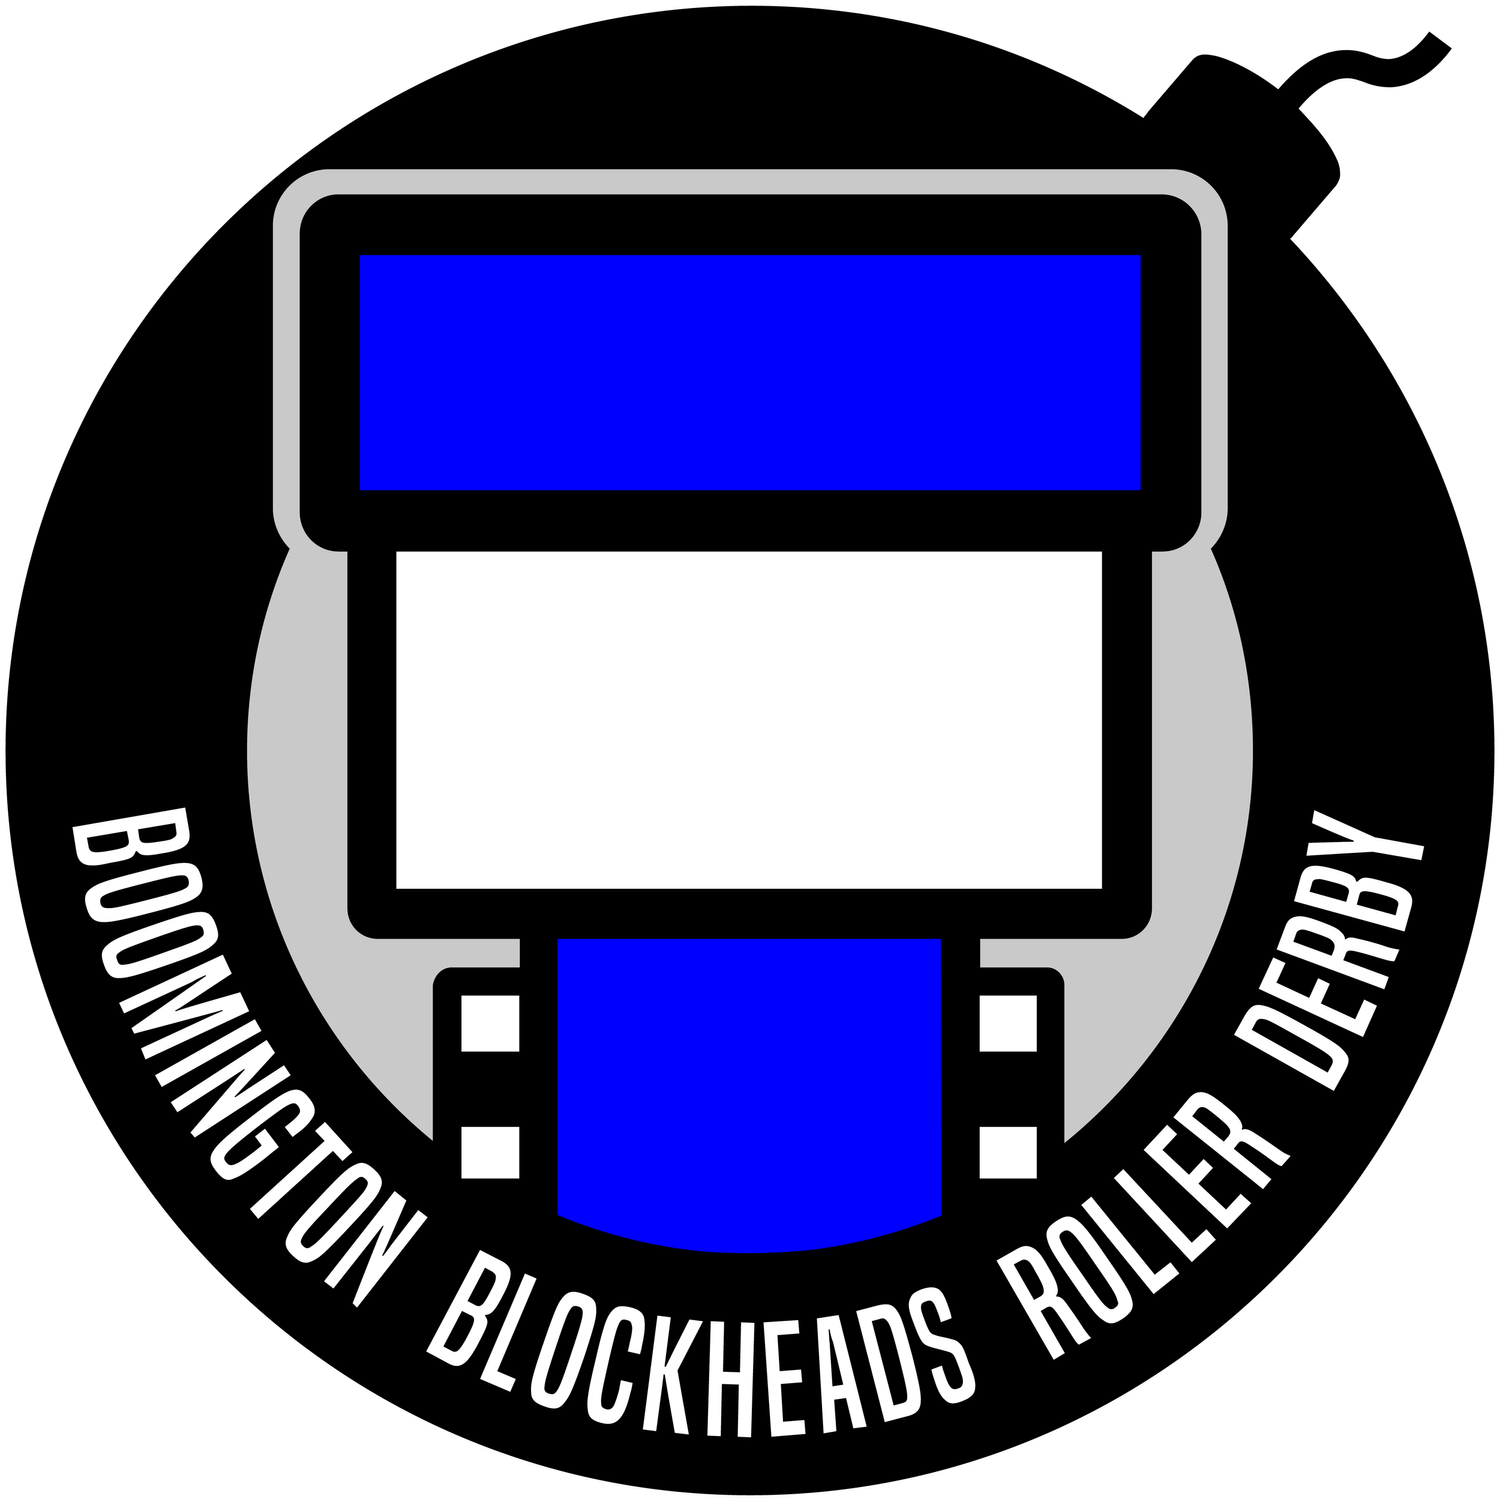 BOOMington Blockheads Roller Derby